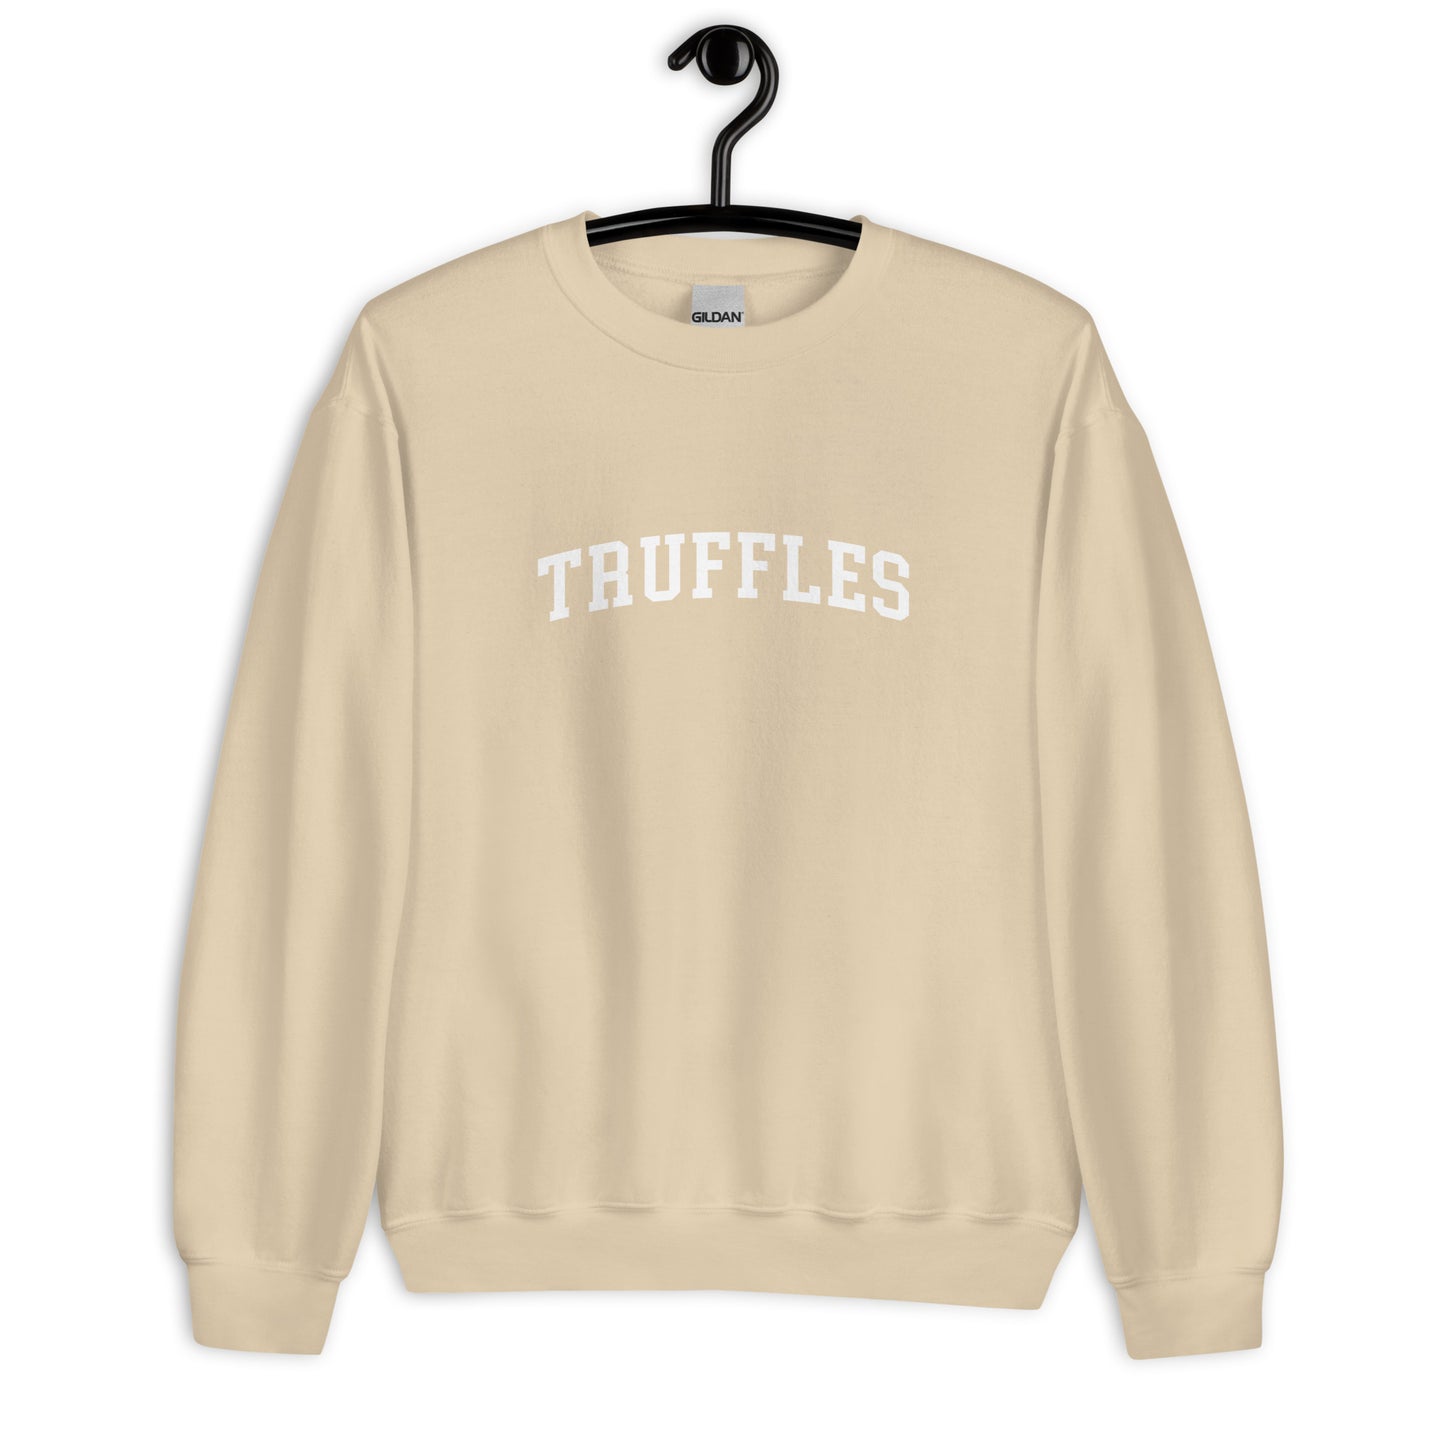 Truffles Sweatshirt - Arched Font